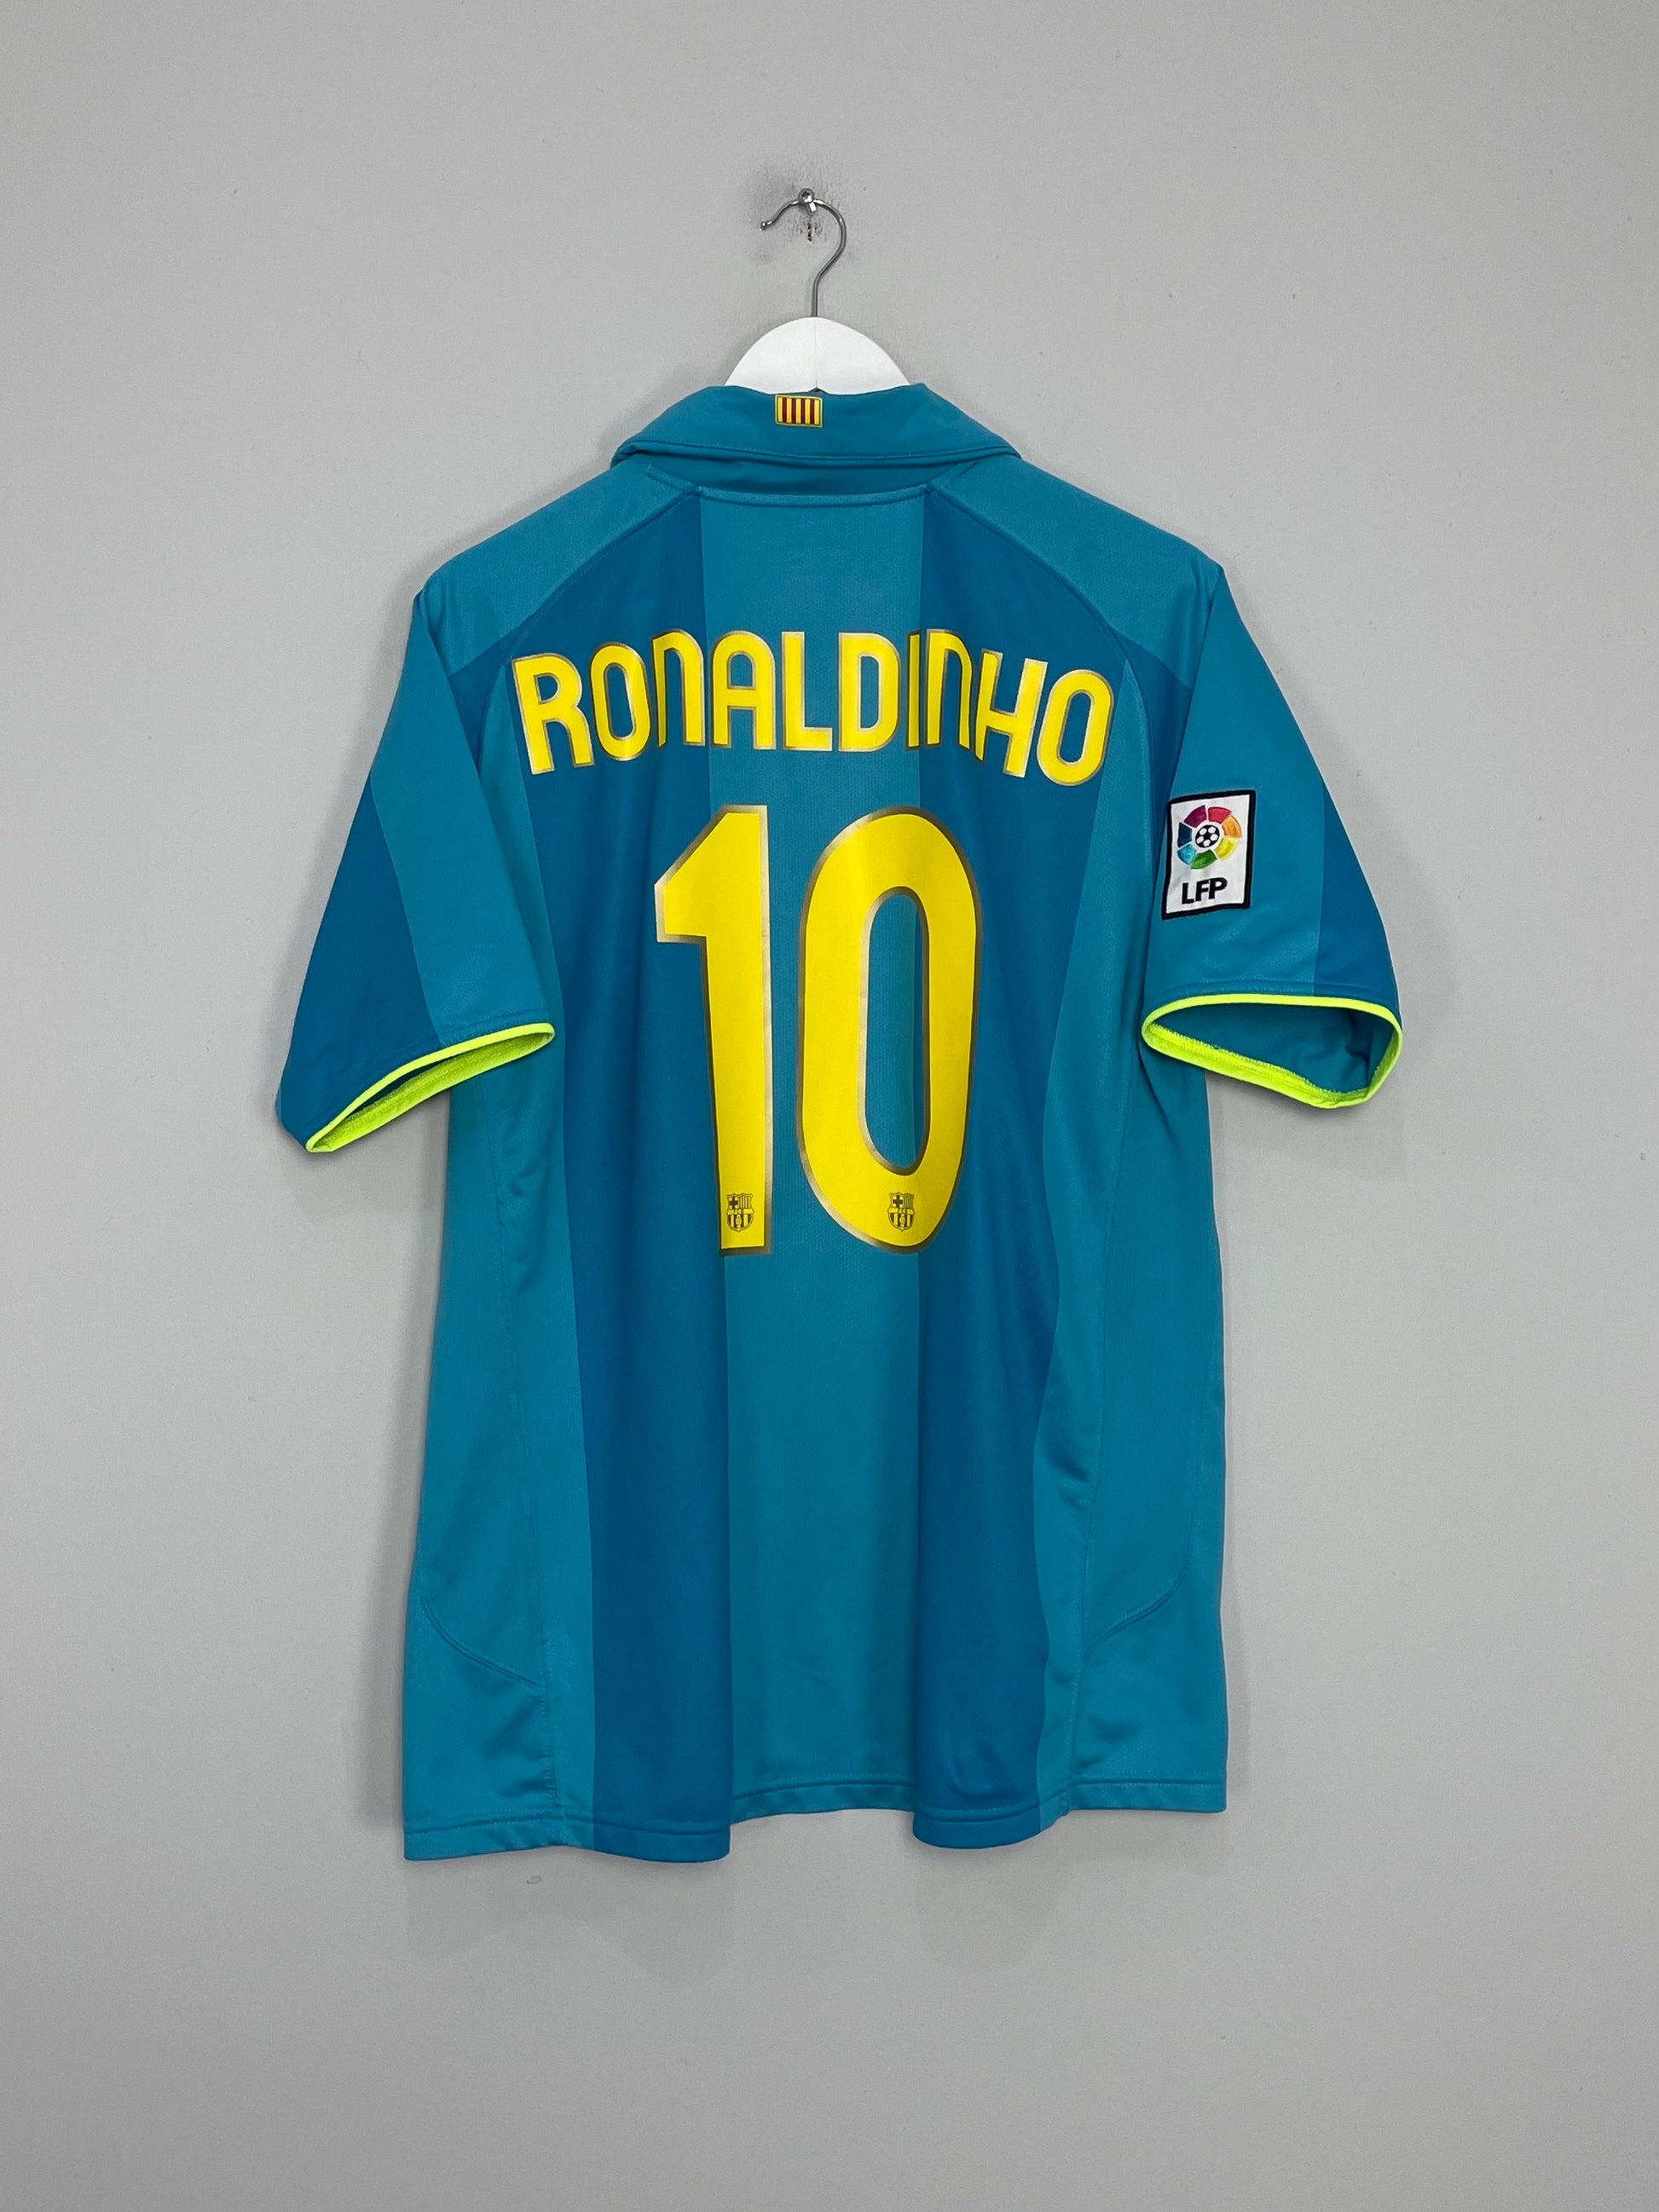 Image of the Barcelona Ronaldinho shirt from the 2007/08 season